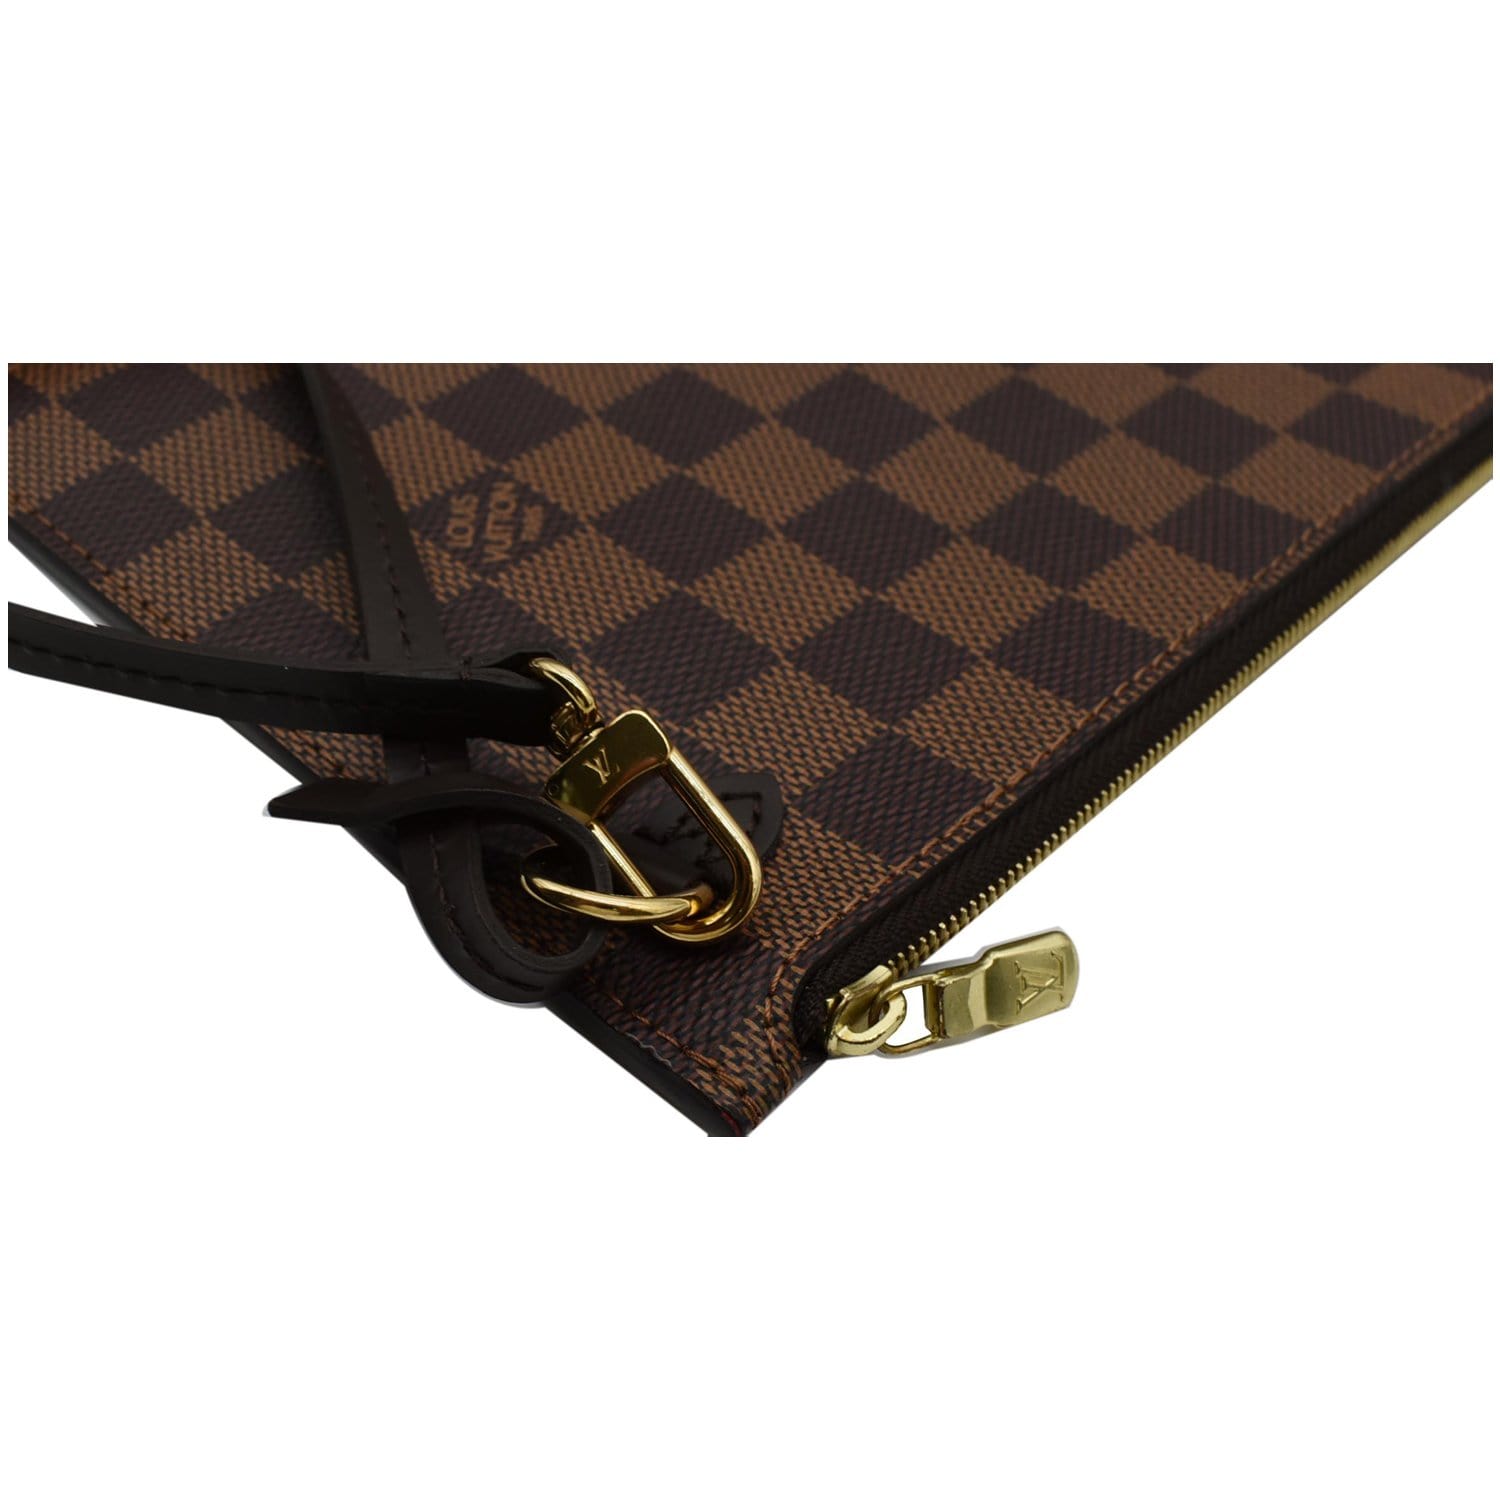 Louis Vuitton Red Epi Leather Neverfull Pochette Wristlet Pouch Bag  271lvs512W 